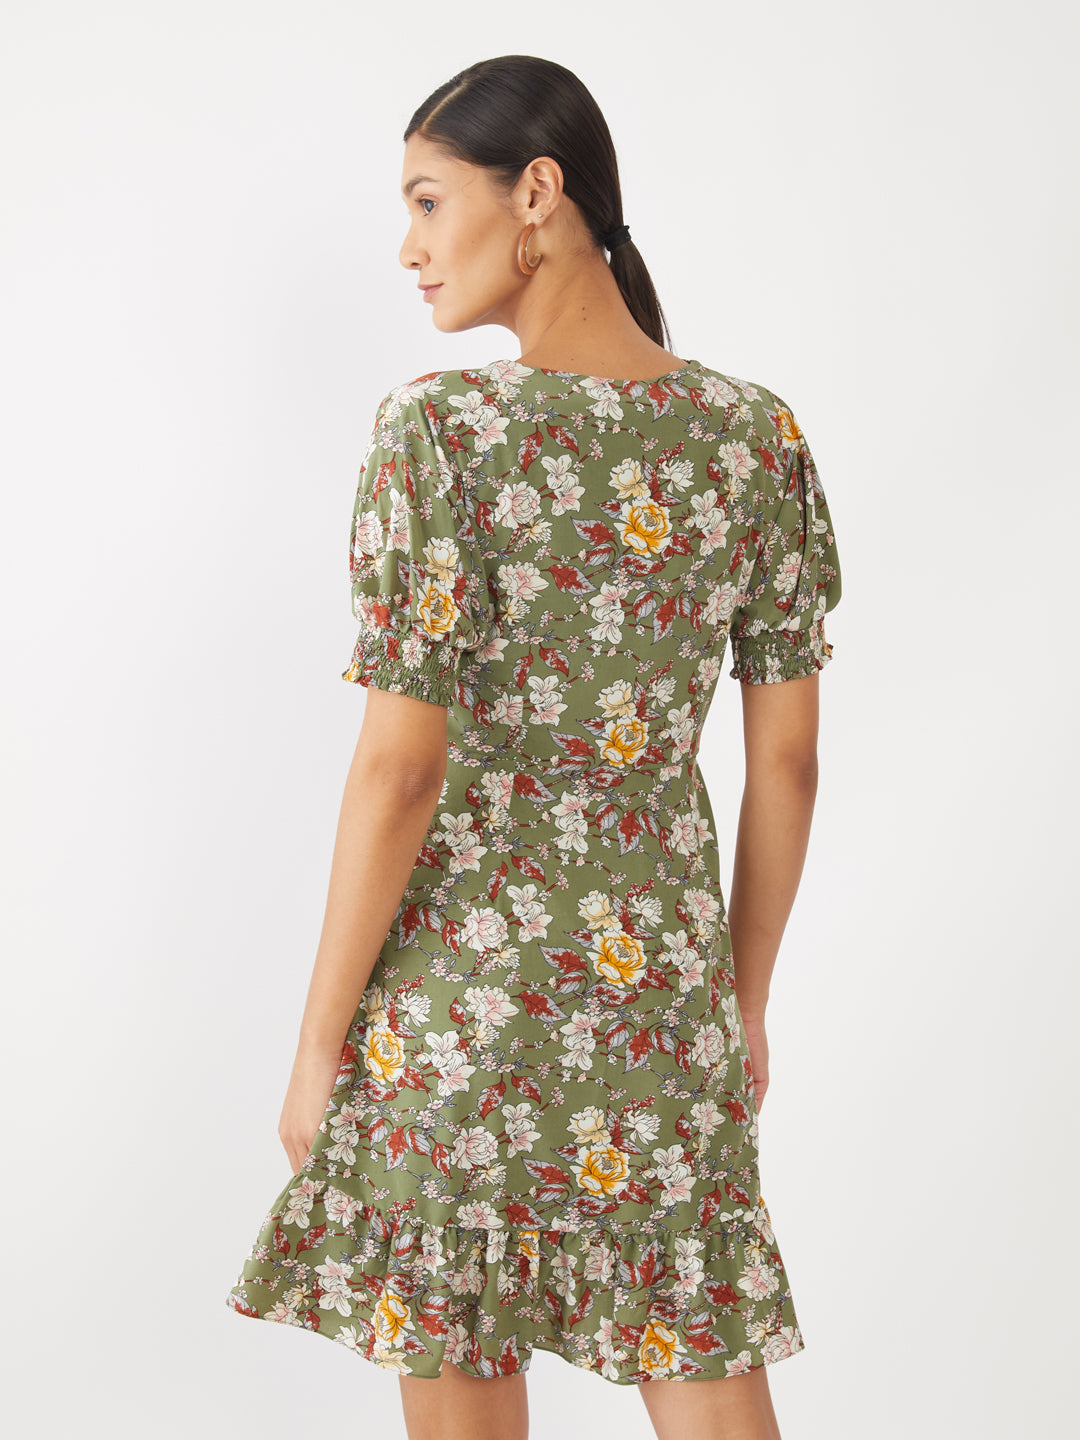 Green Printed Short Dress For Women